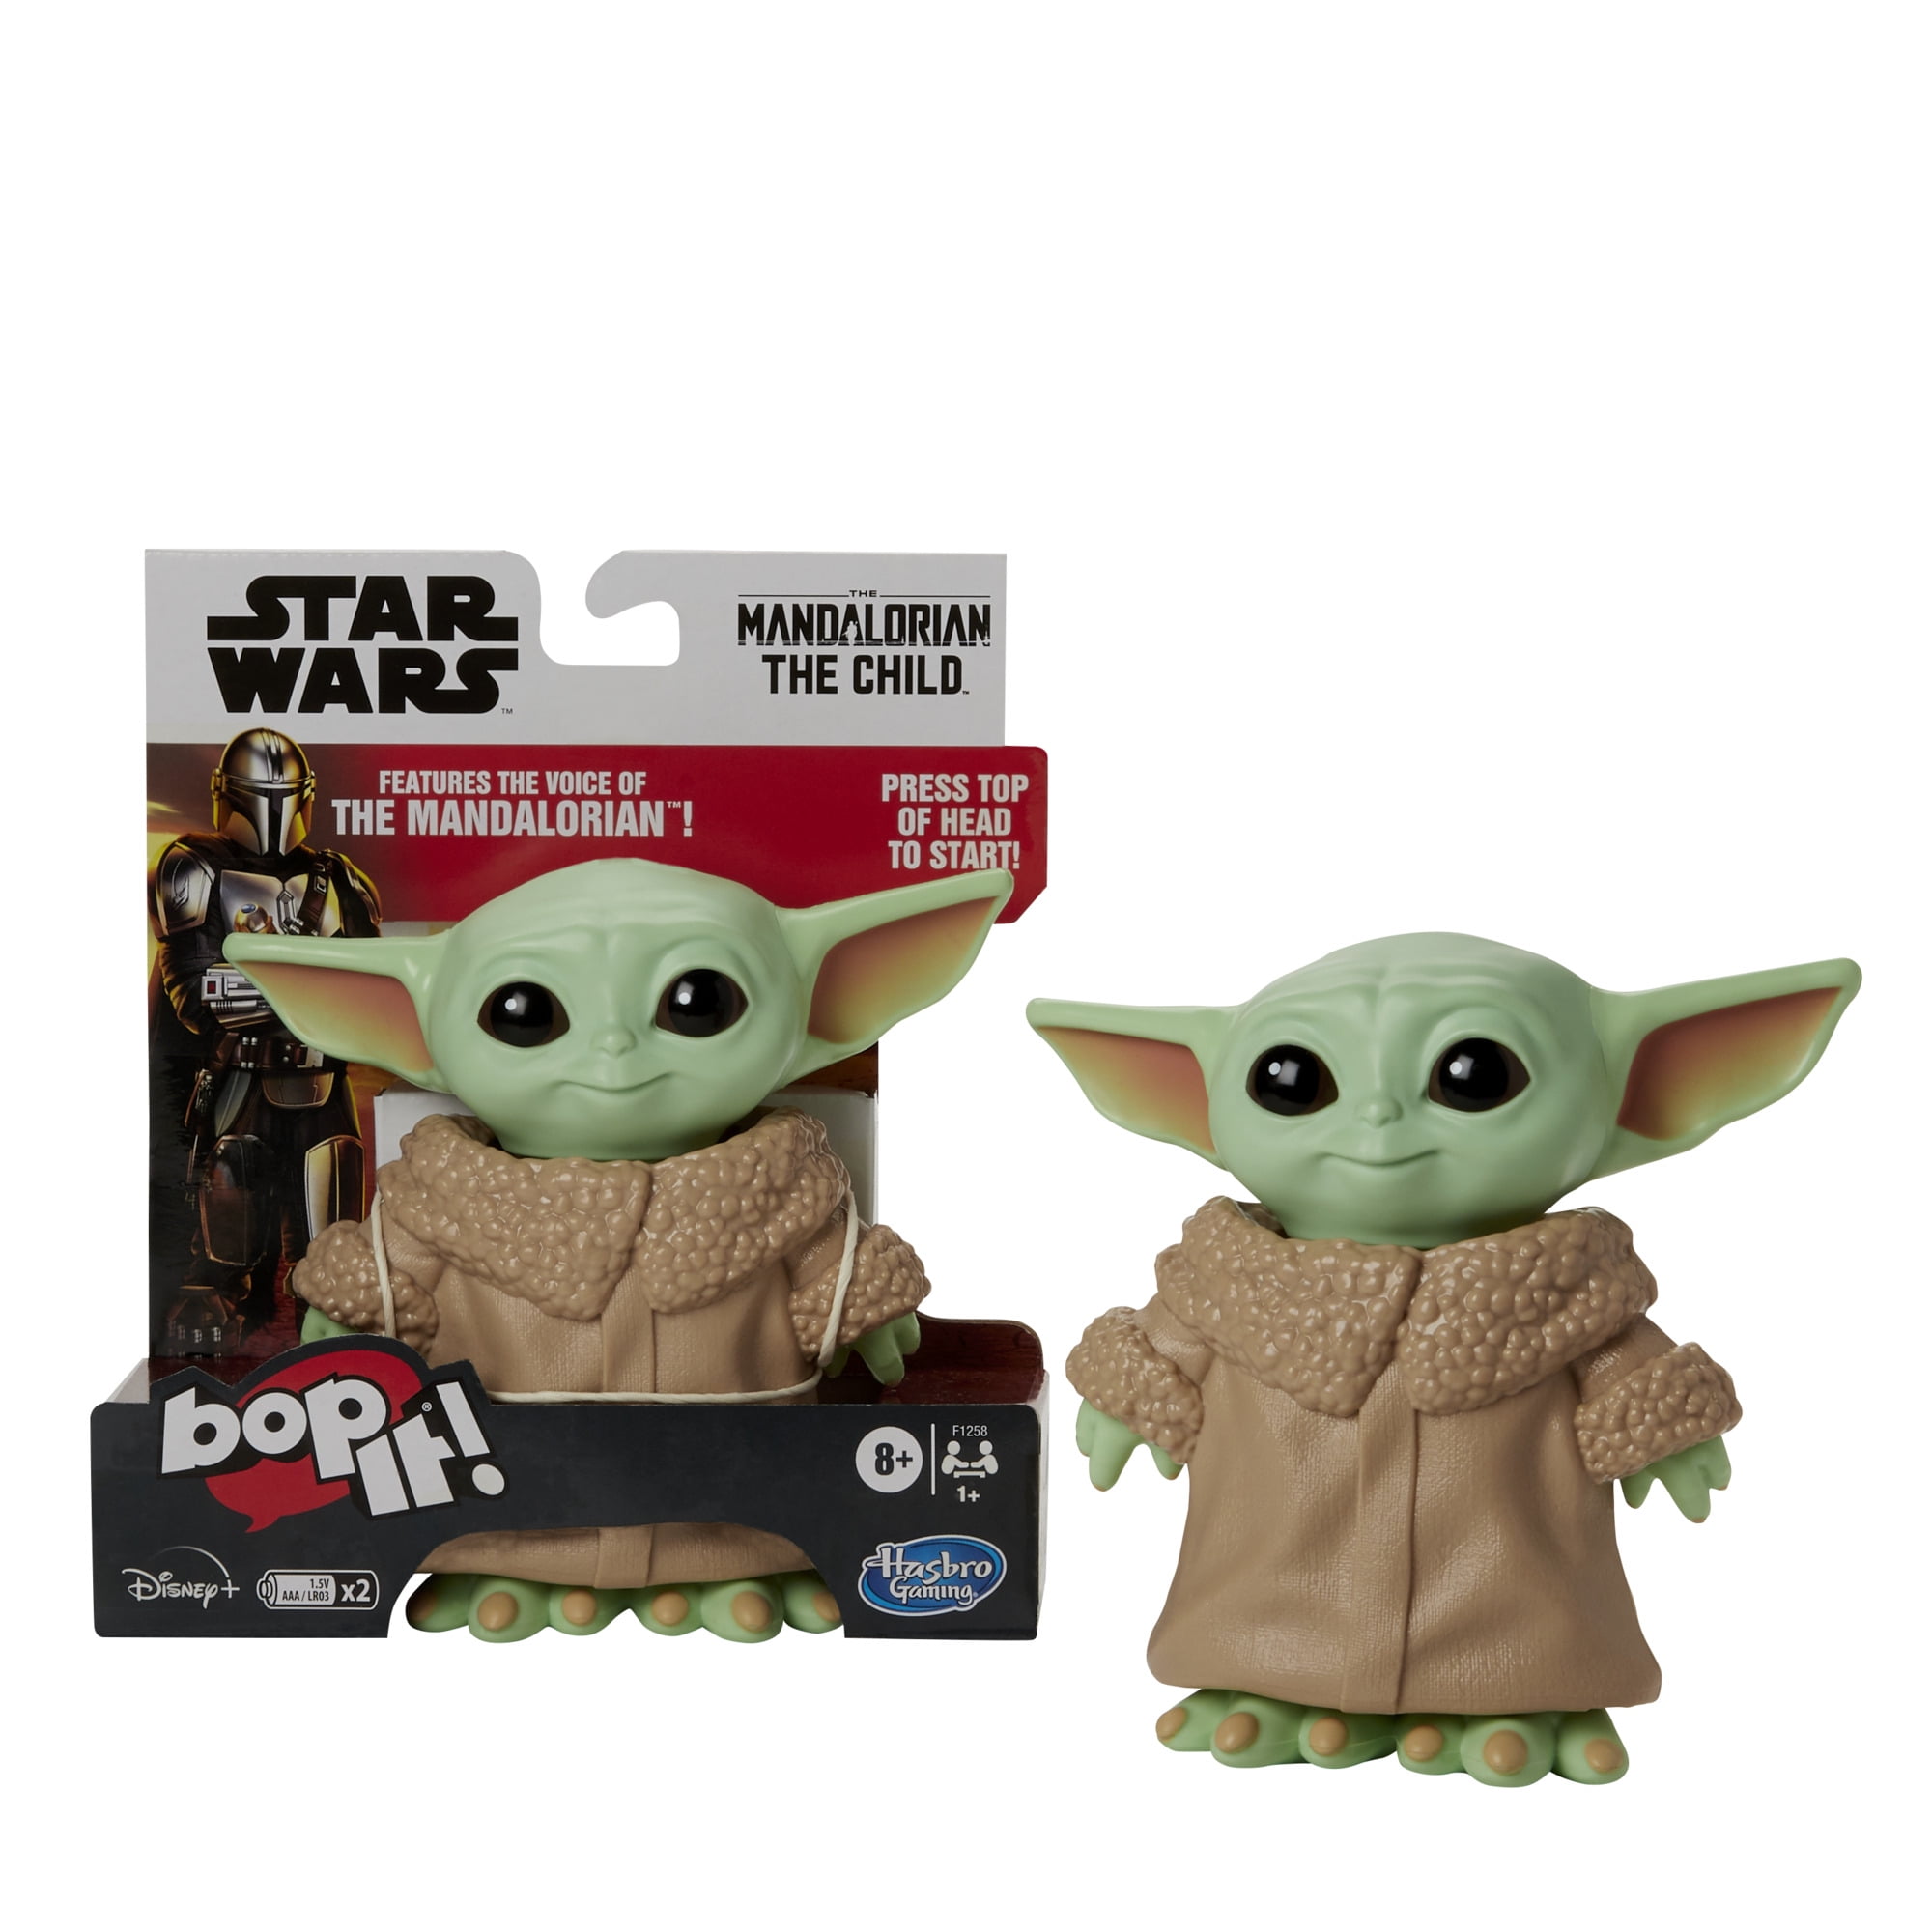 Star Wars Mandalorian The Child Baby Yoda Figure Toy Storage Trunk Decor Disney 